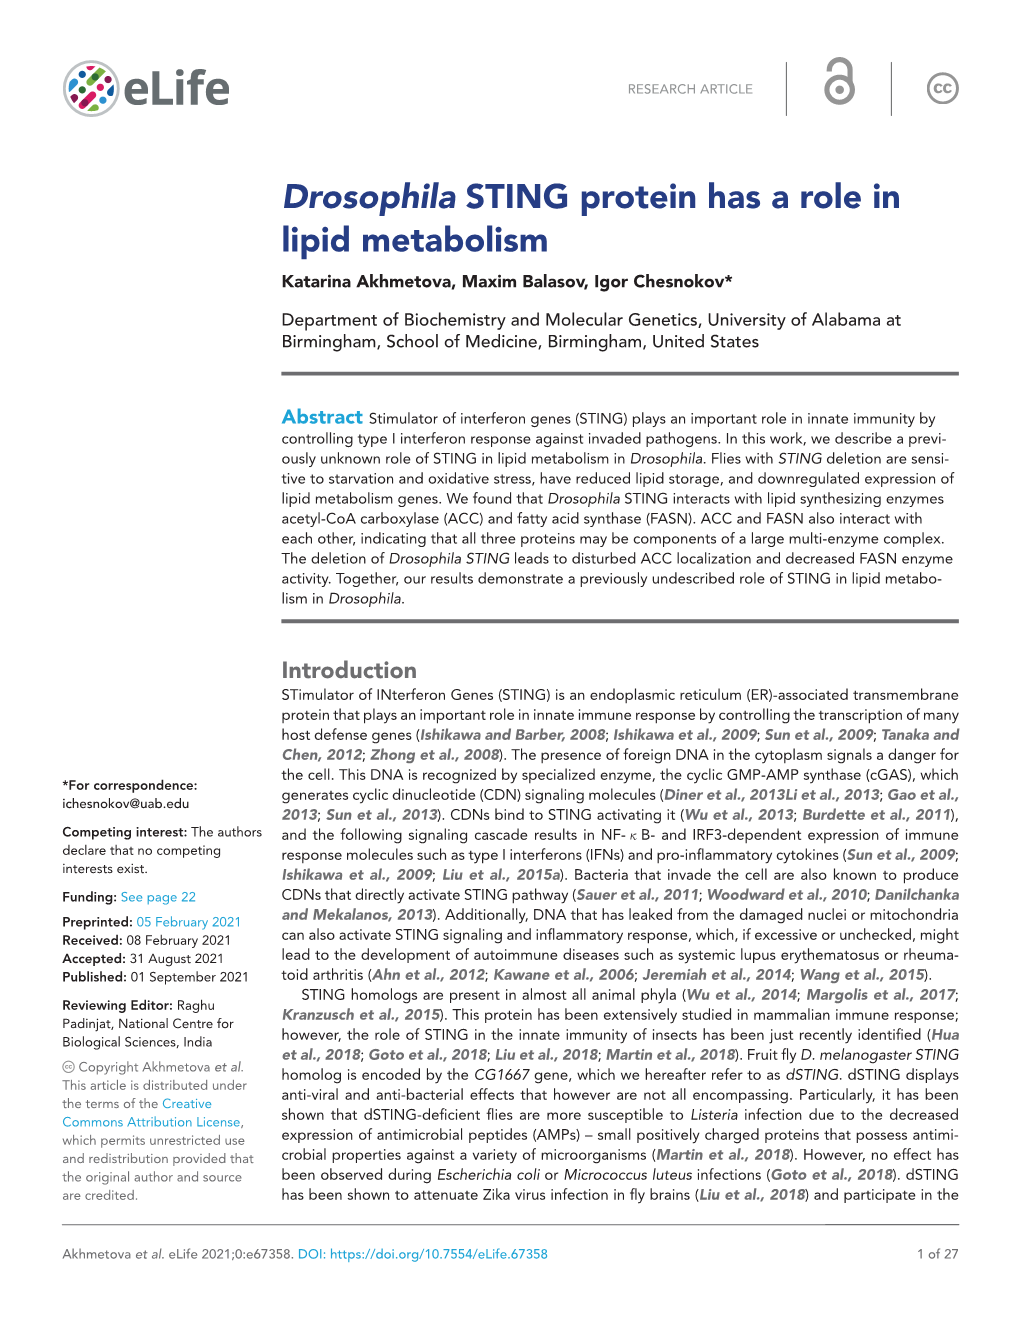 Drosophila STING Protein Has a Role in Lipid Metabolism